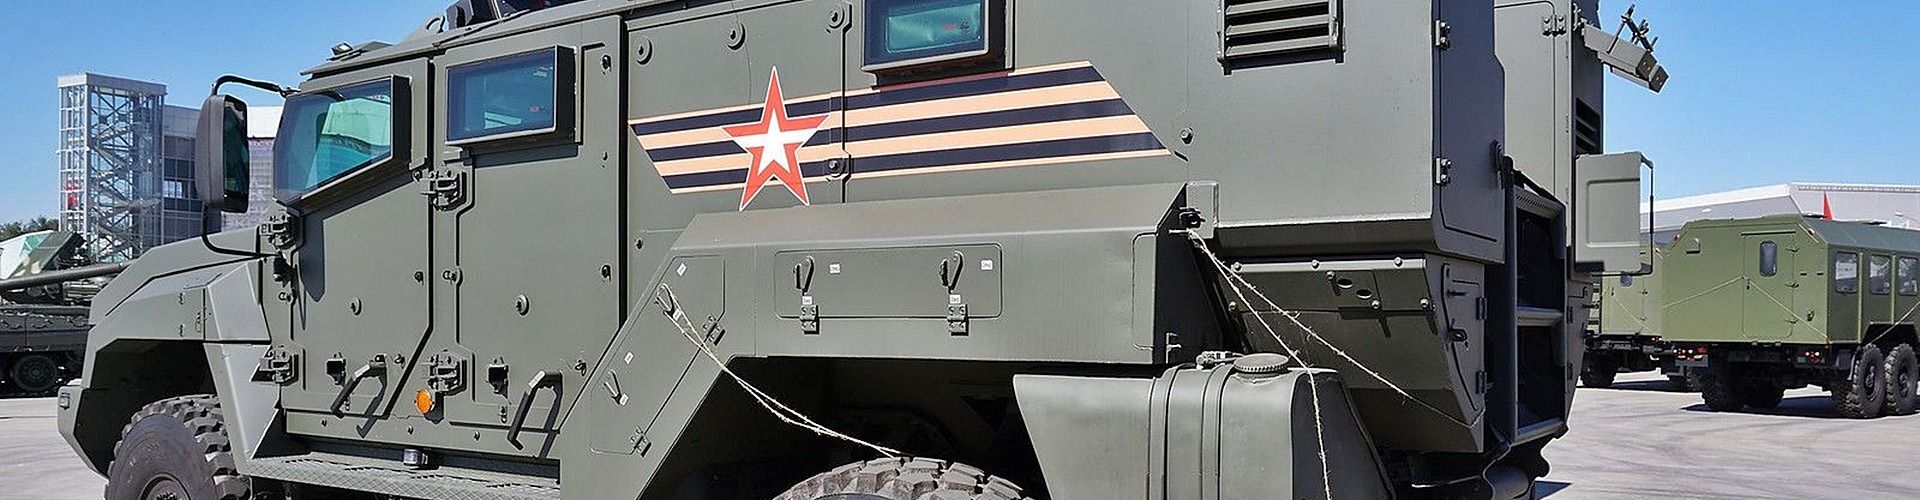 Los mejores camiones militares rusos de la historia 4 | Total Renting